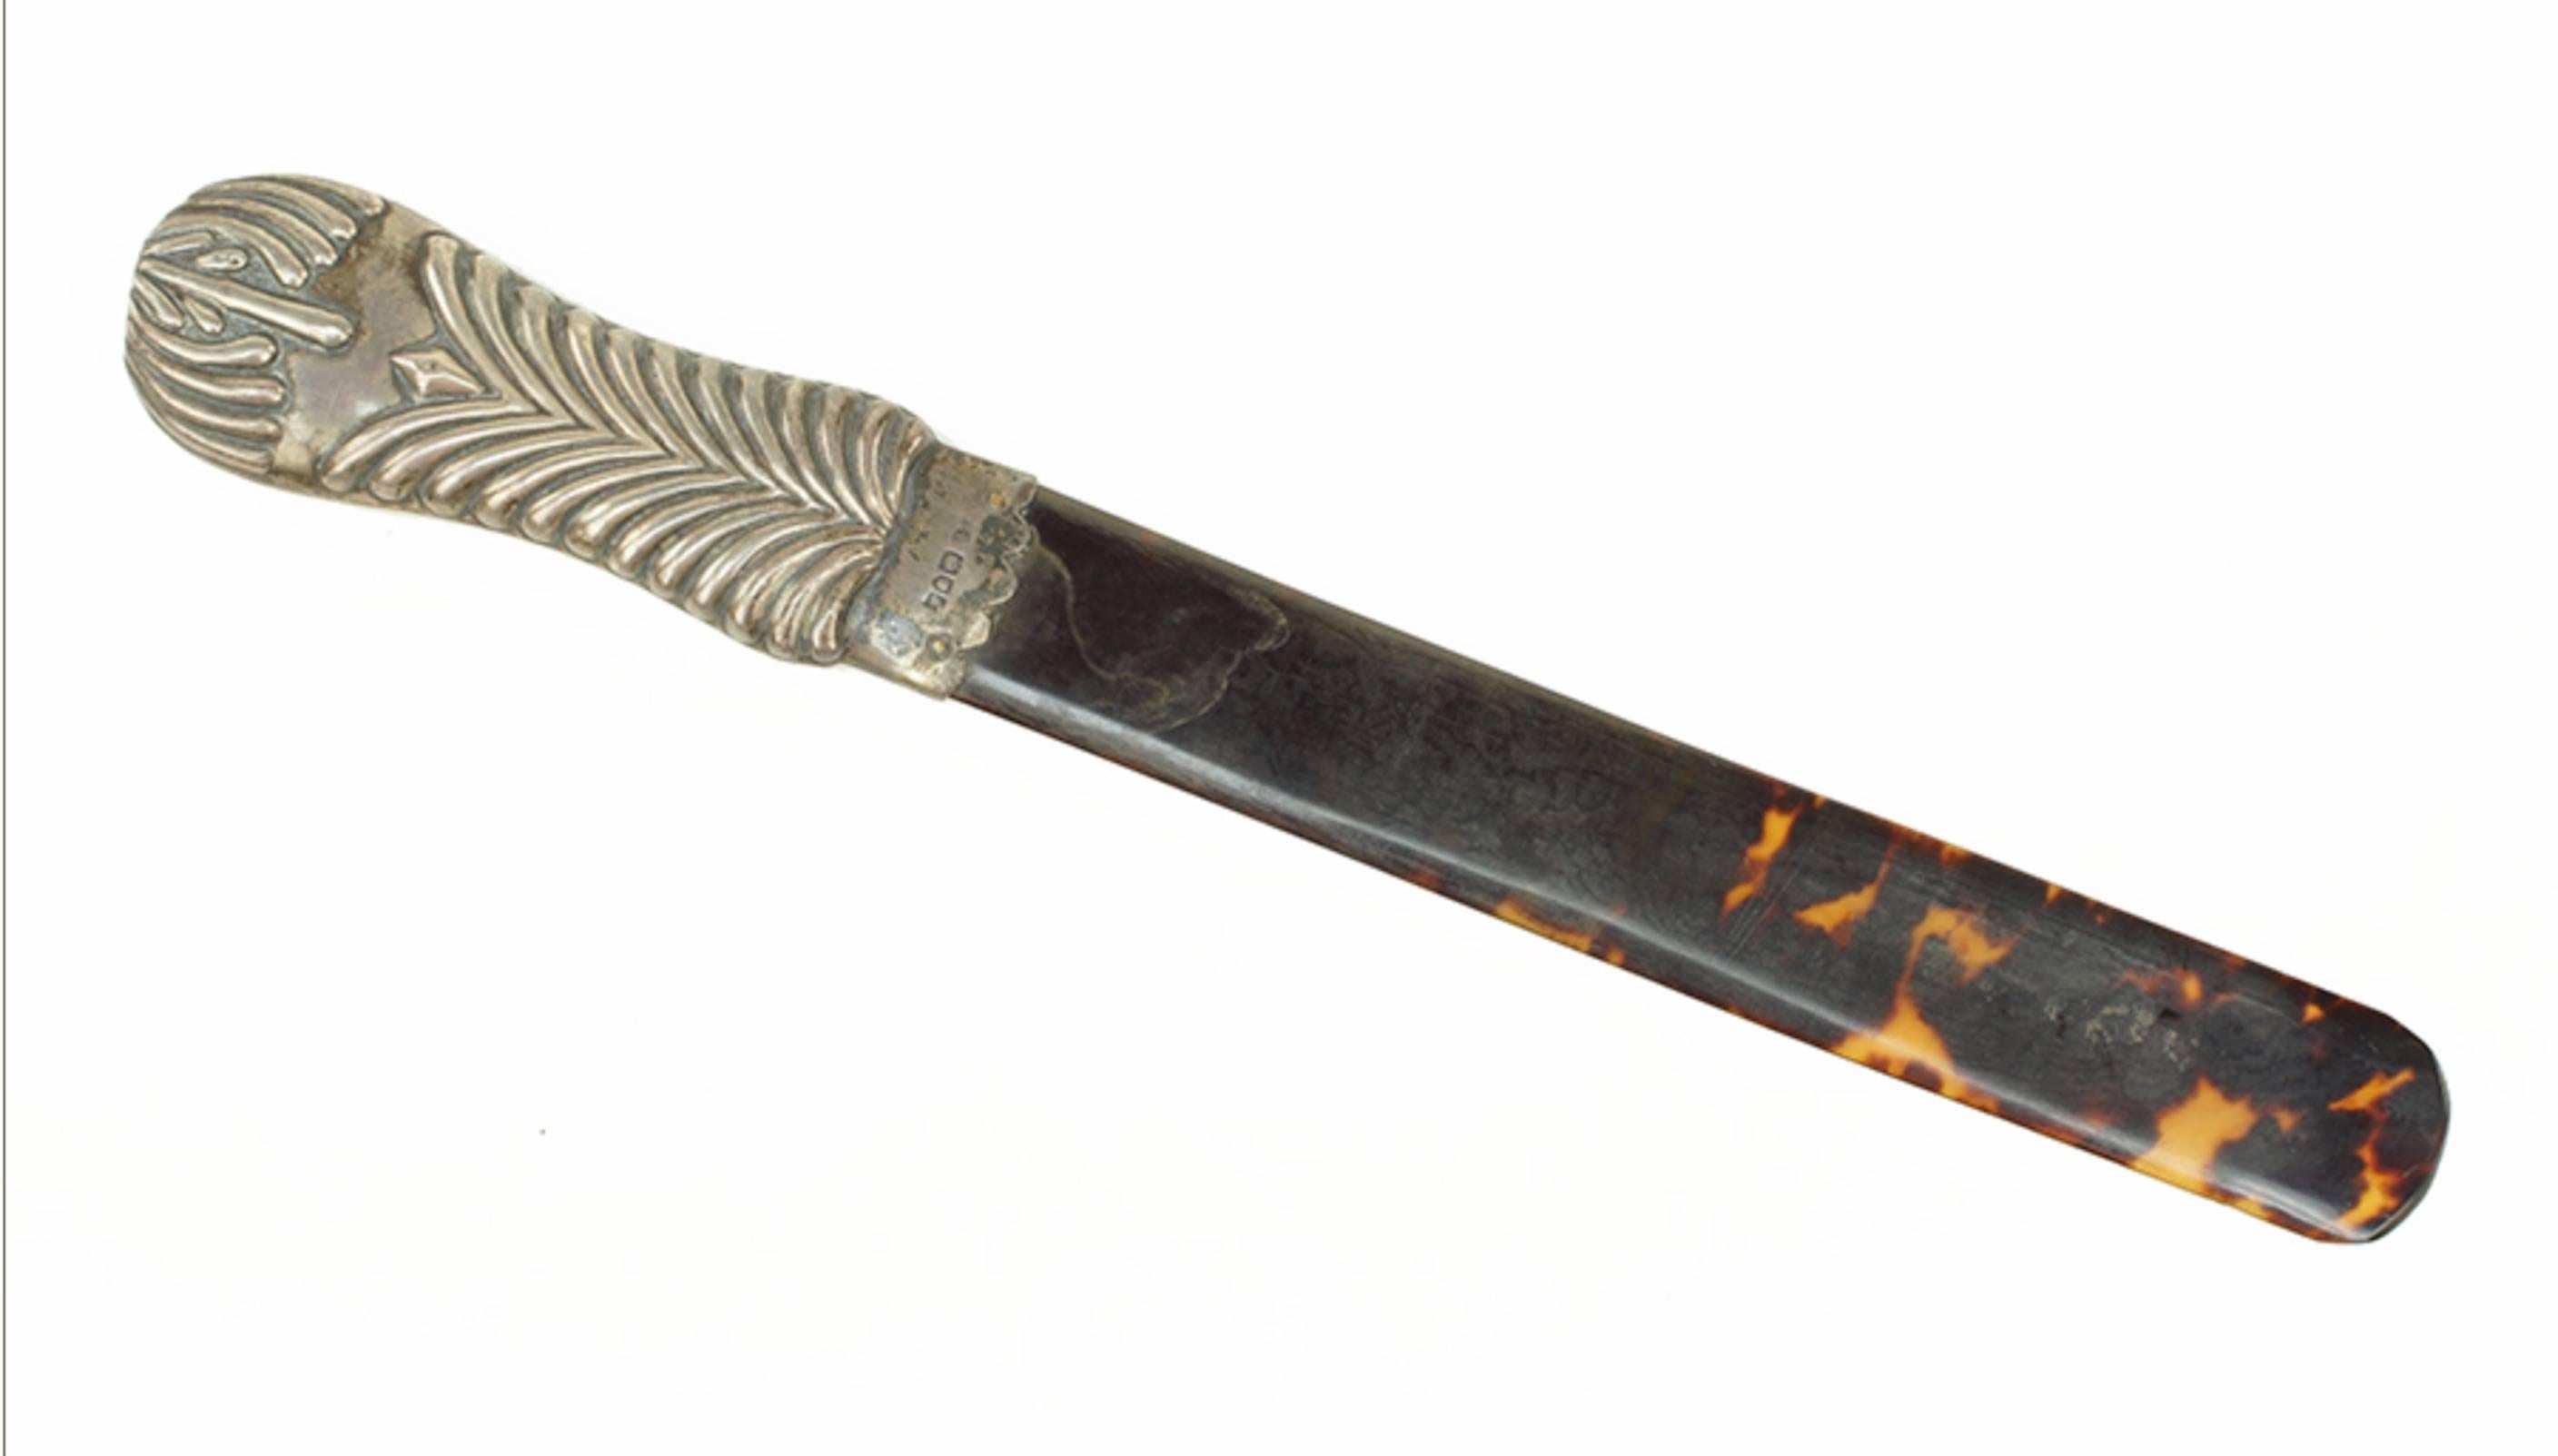 An English tortoiseshell and silver page turner
Tortoiseshell blade with an English repousse silver handle
Measures: Length 12.5